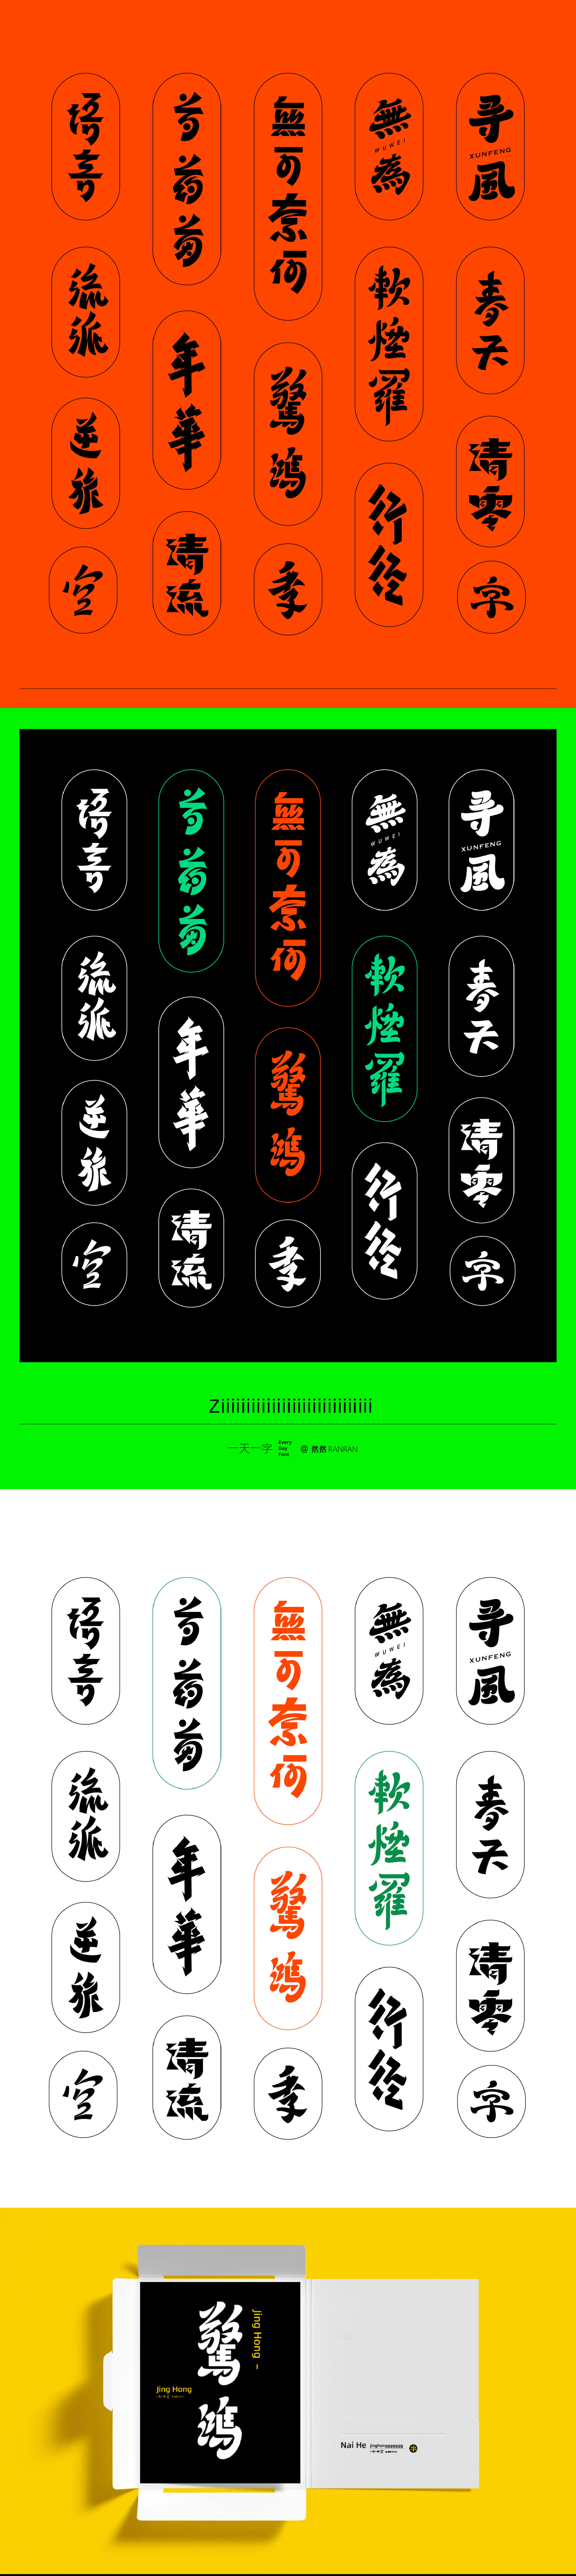 4P Inspiration Chinese font logo design scheme #.711